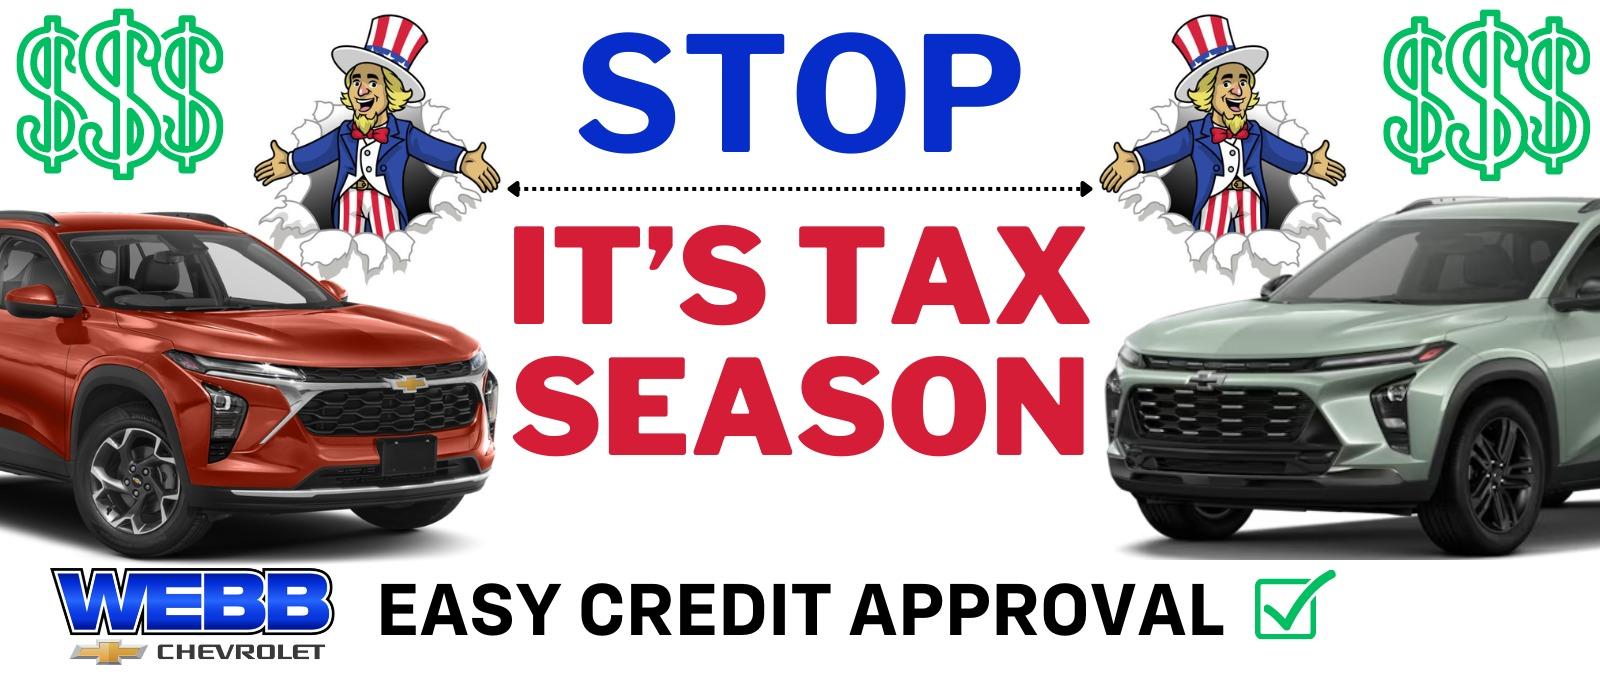 It's Tax Season at Webb Chevy!